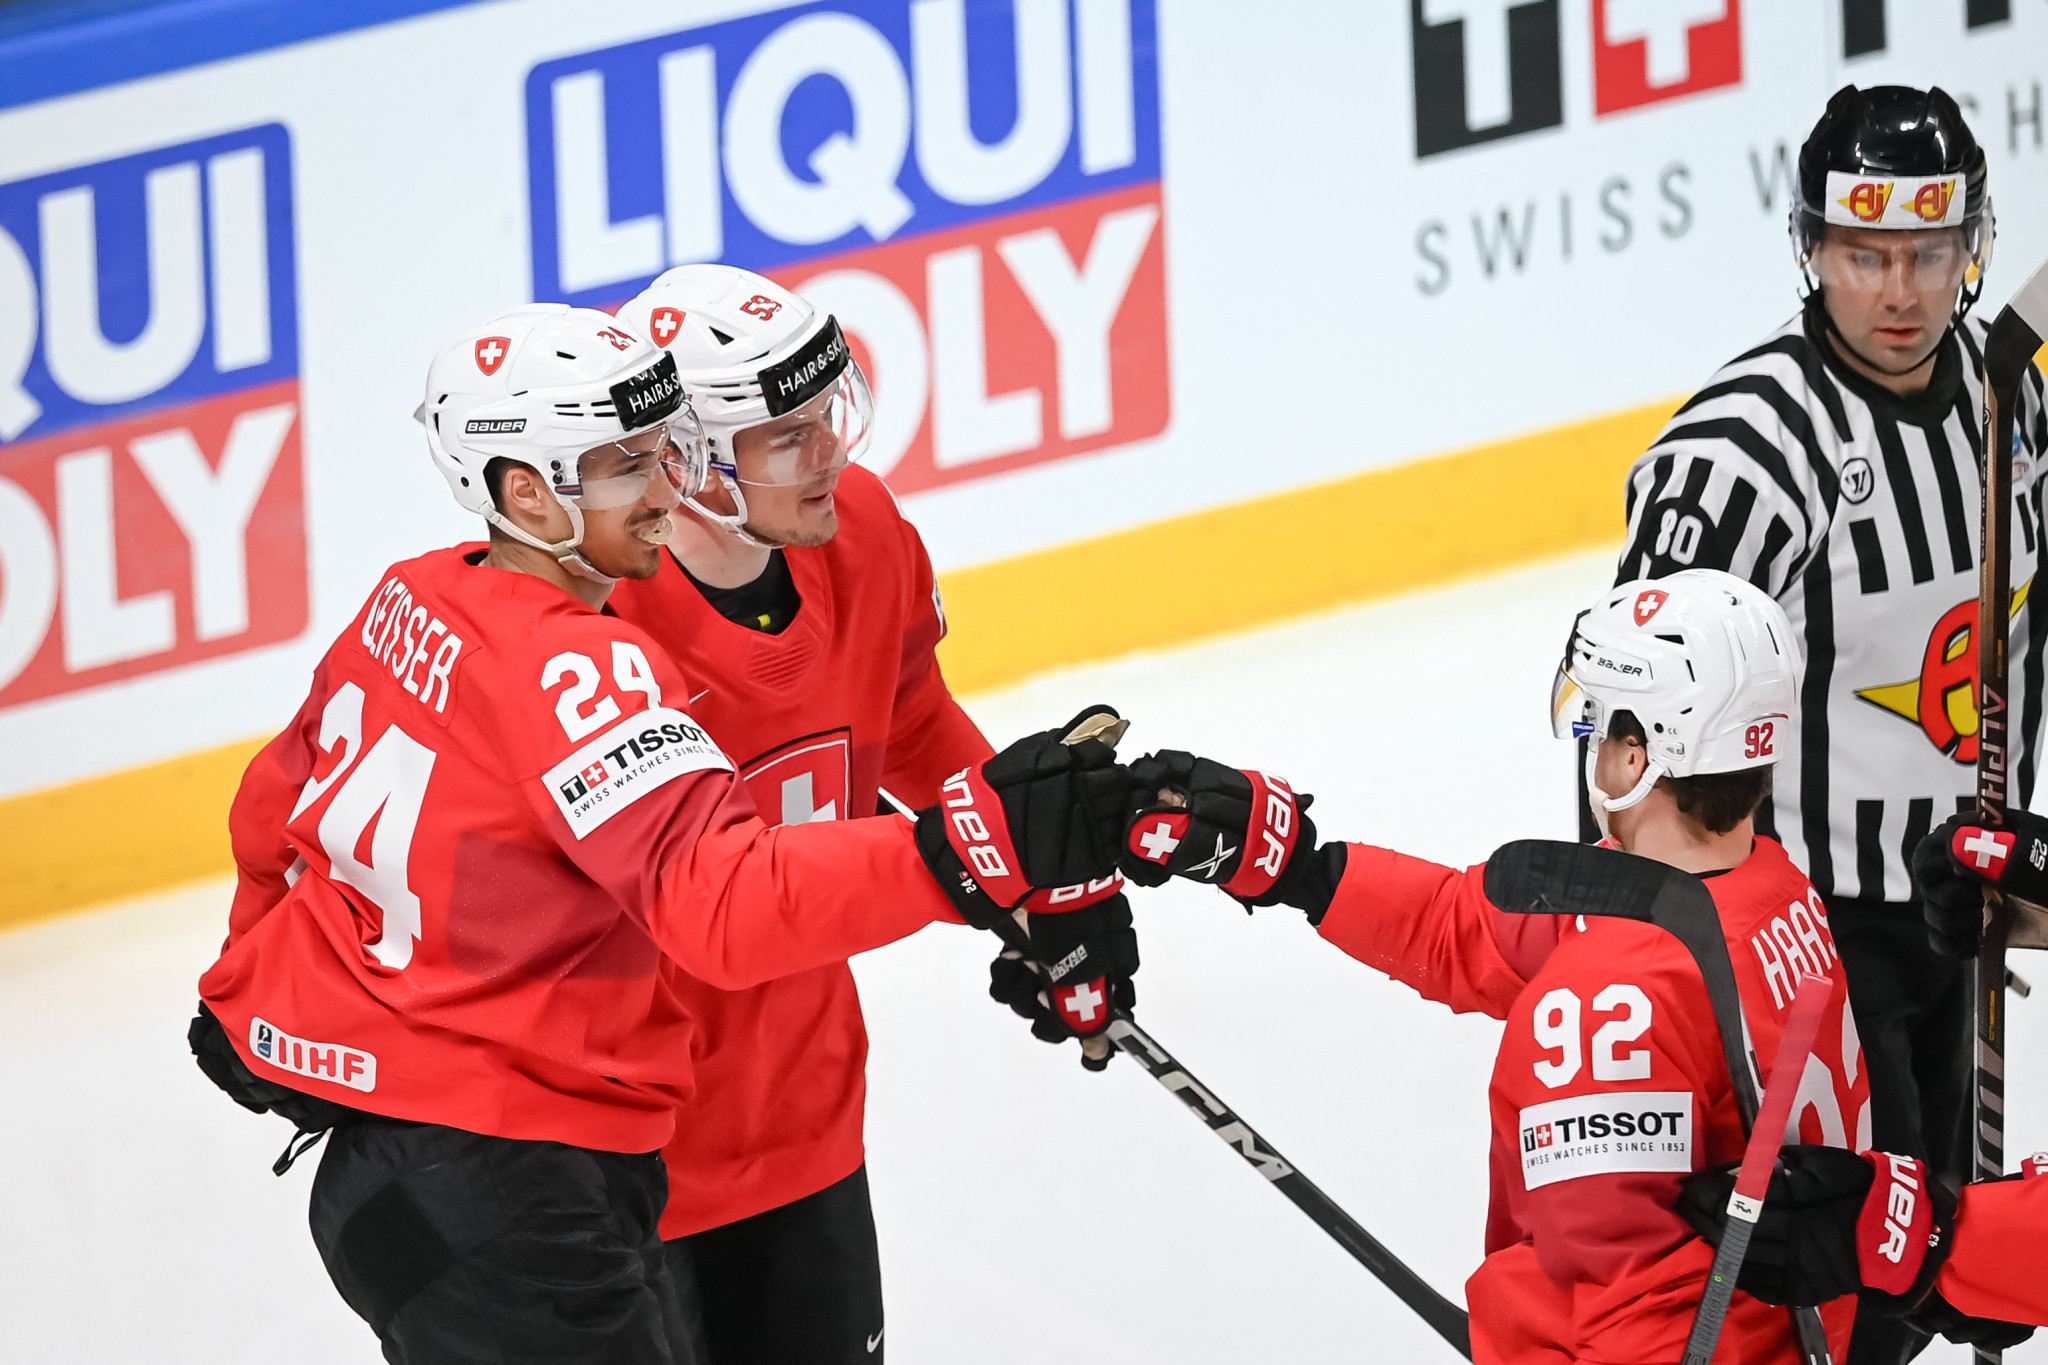 Switzerland and Denmark continue winning streaks at IIHF World Championship